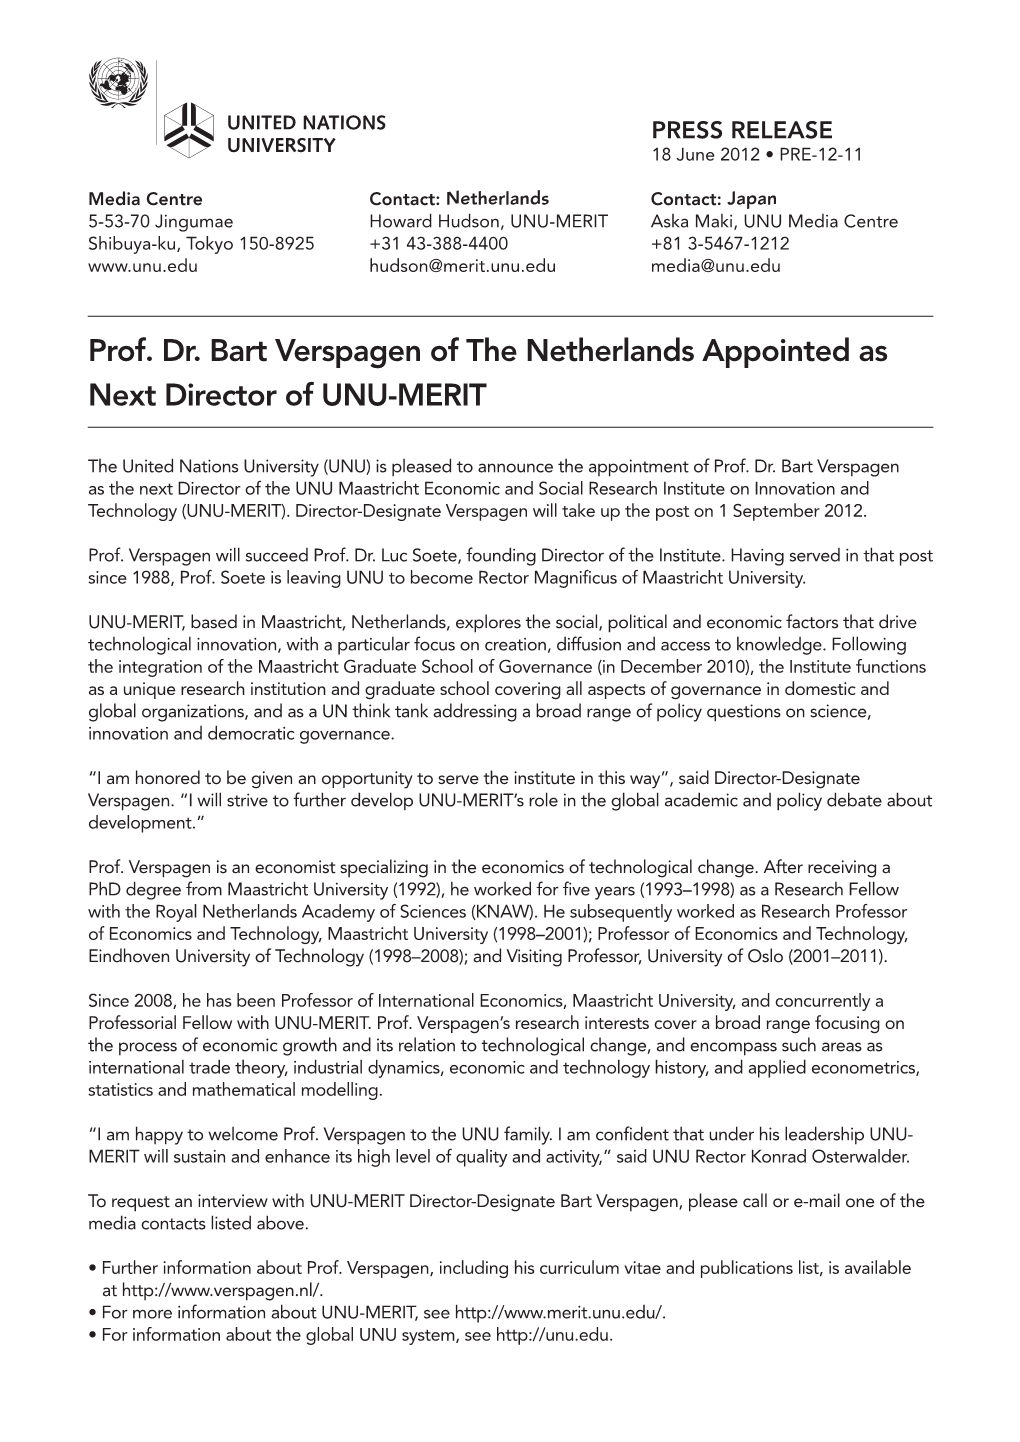 Prof. Dr. Bart Verspagen of the Netherlands Appointed As Next Director of UNU-MERIT